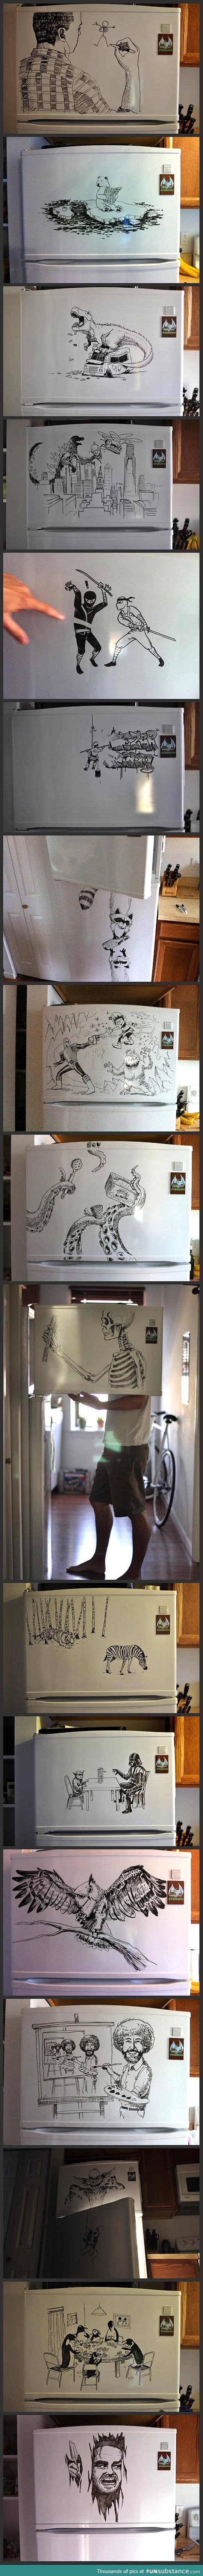 Amazing fridge art